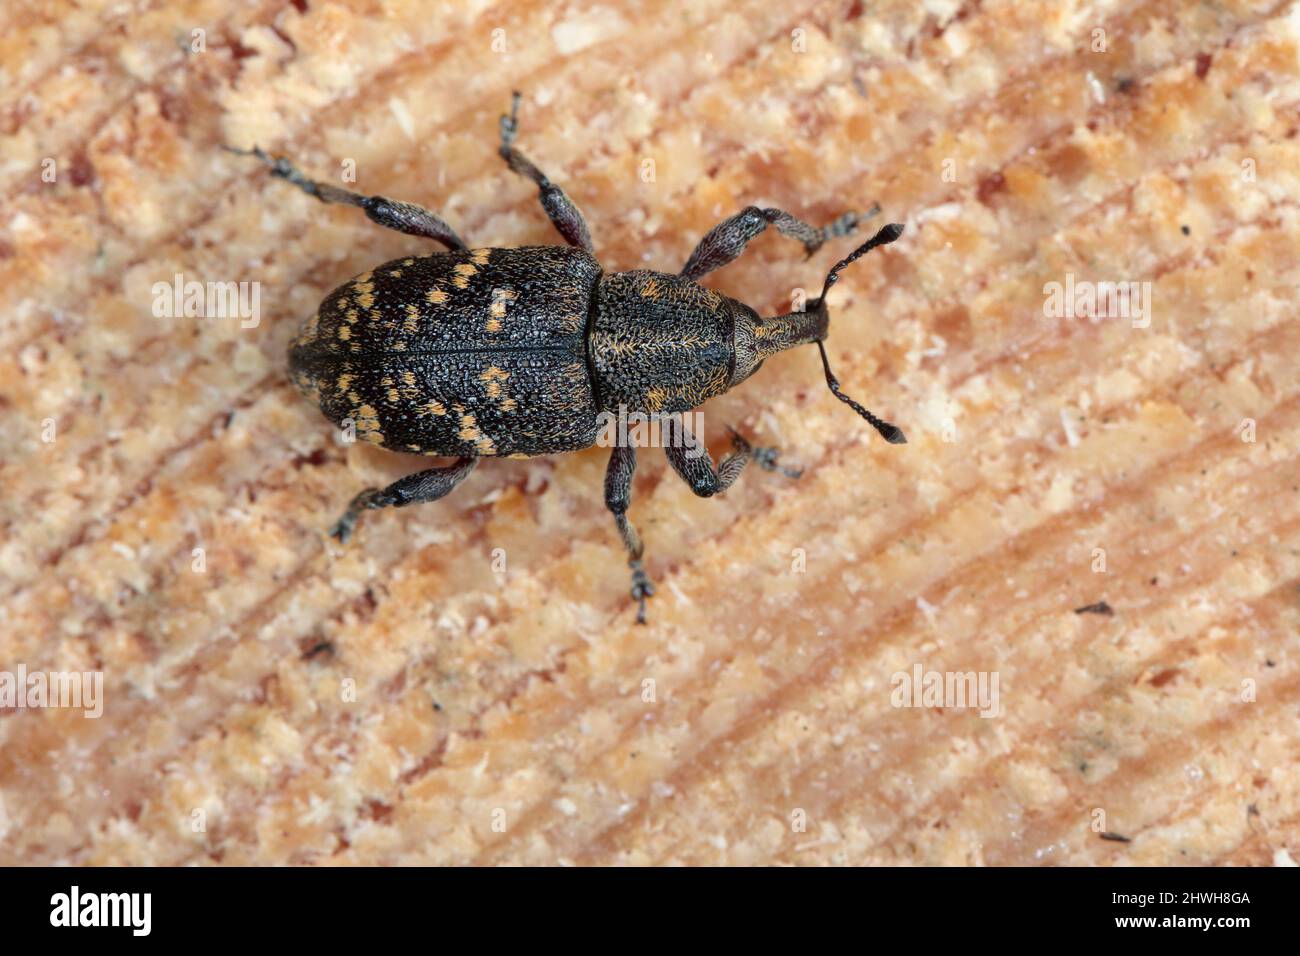 Snout beetle (Hylobius abietis) sitting on pine wood, macro photo. Stock Photo